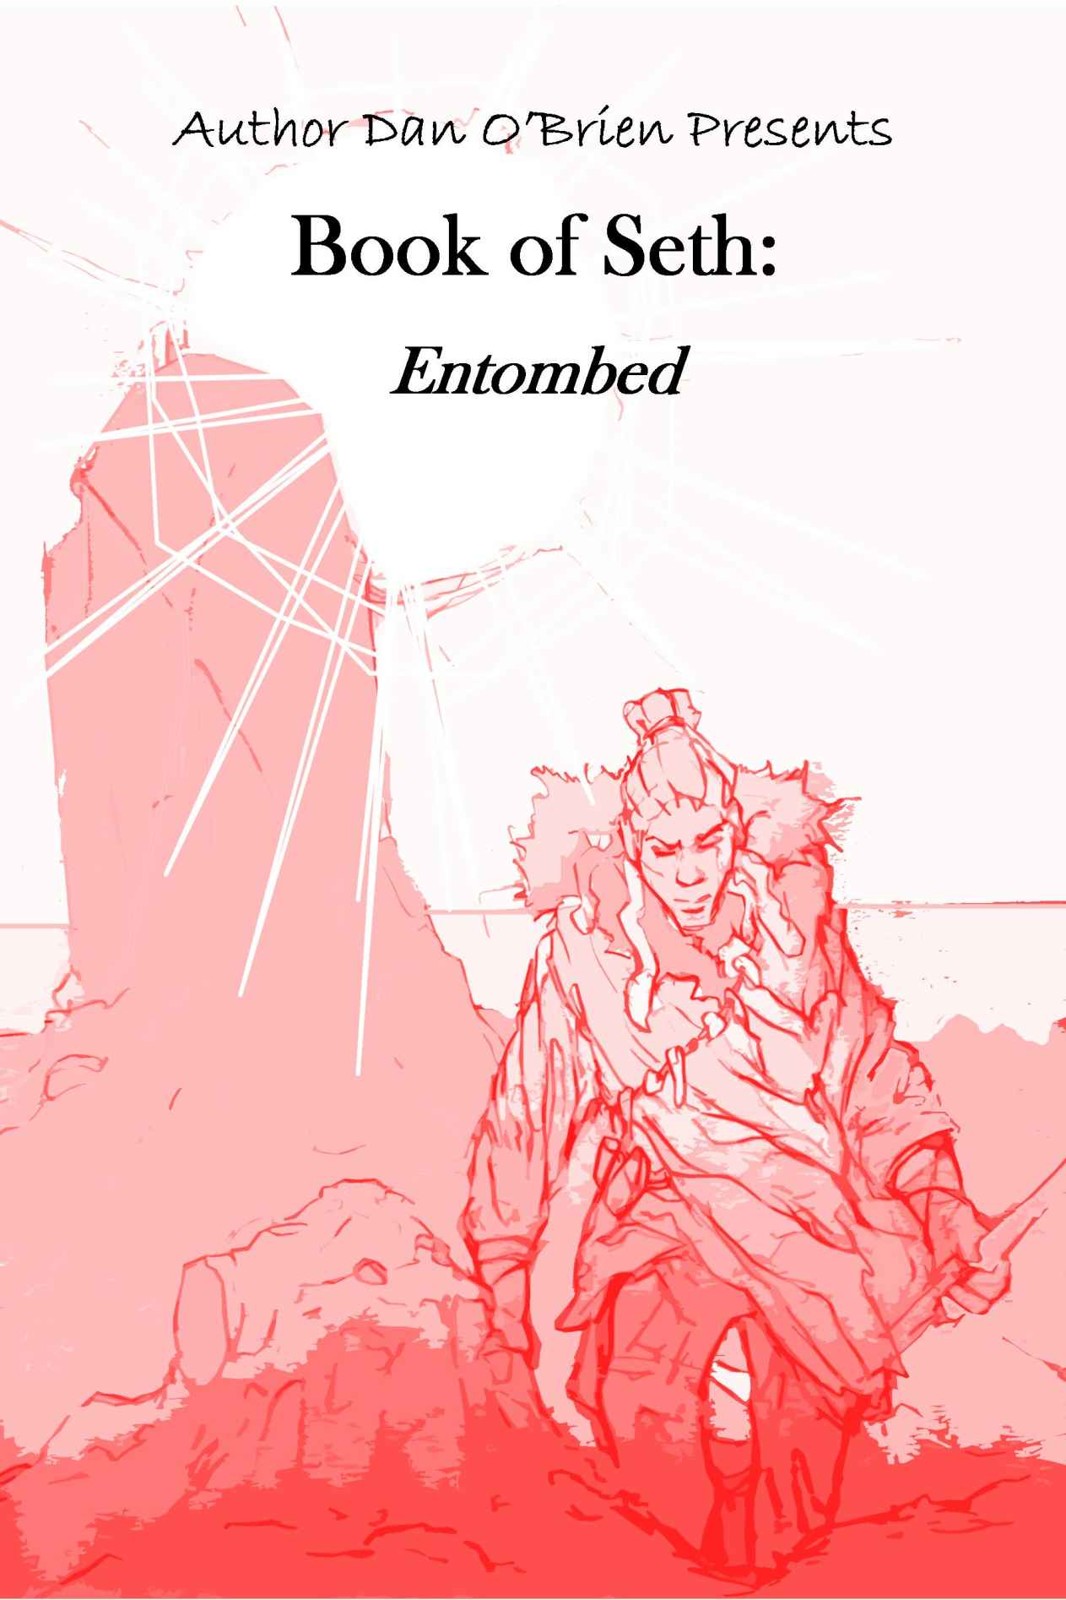 Book of Seth: Entombed